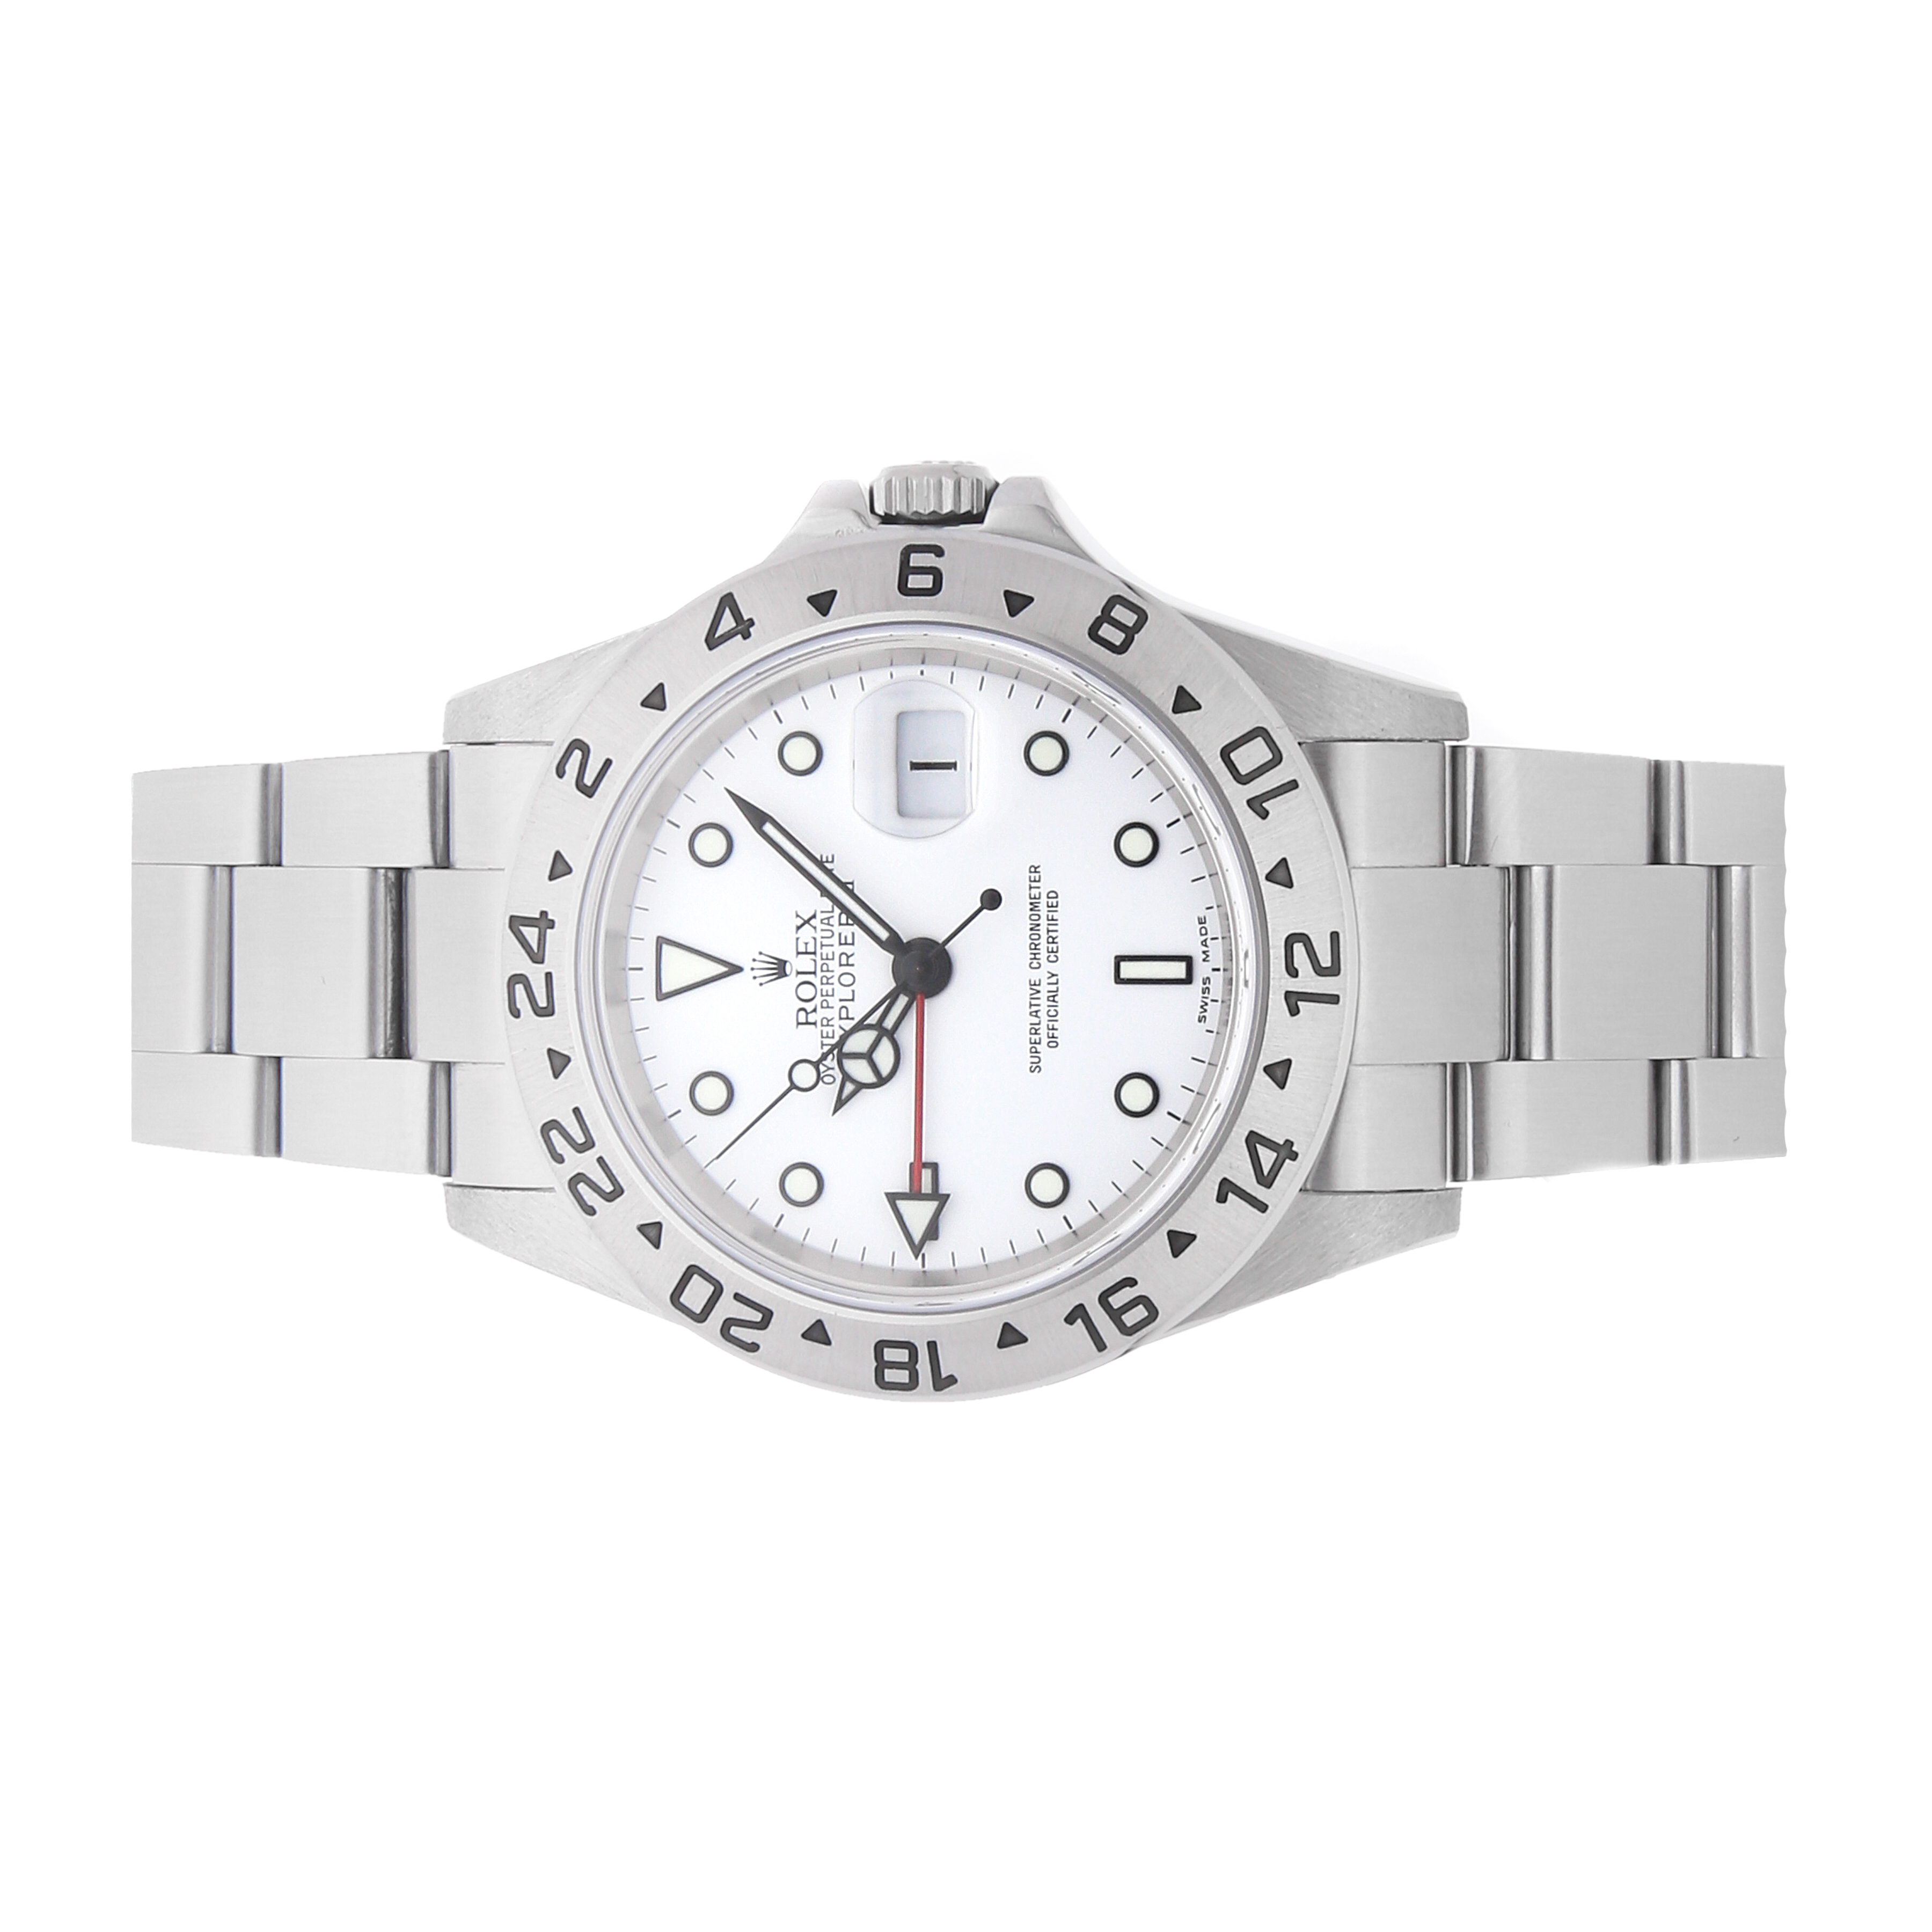 Replica Watches Reddit Rolex Explorer Ii 16570 40mm White Dial - Best Rolex Replica Watches ...